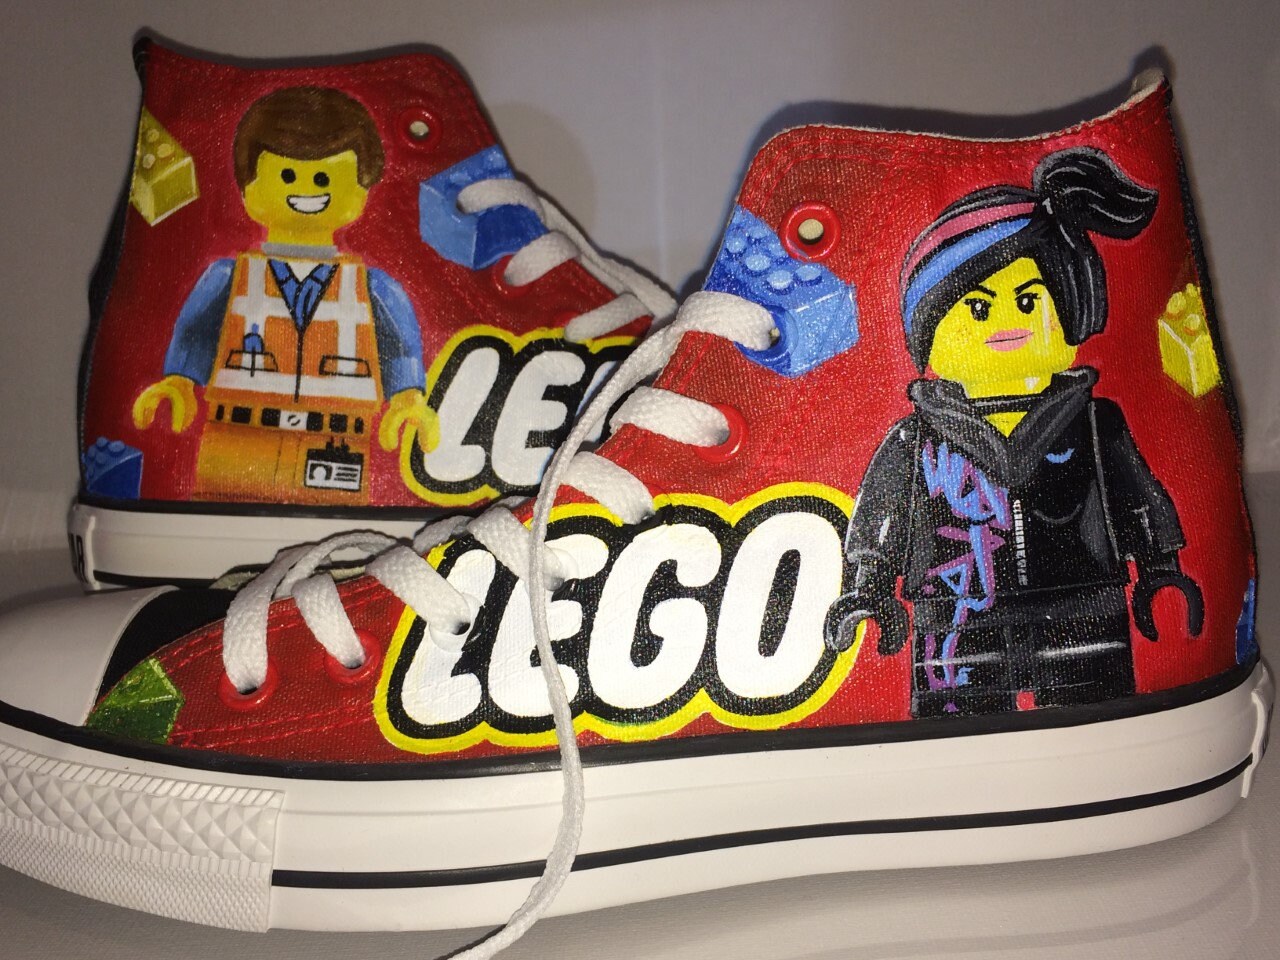 Sneakers Legos - Etsy